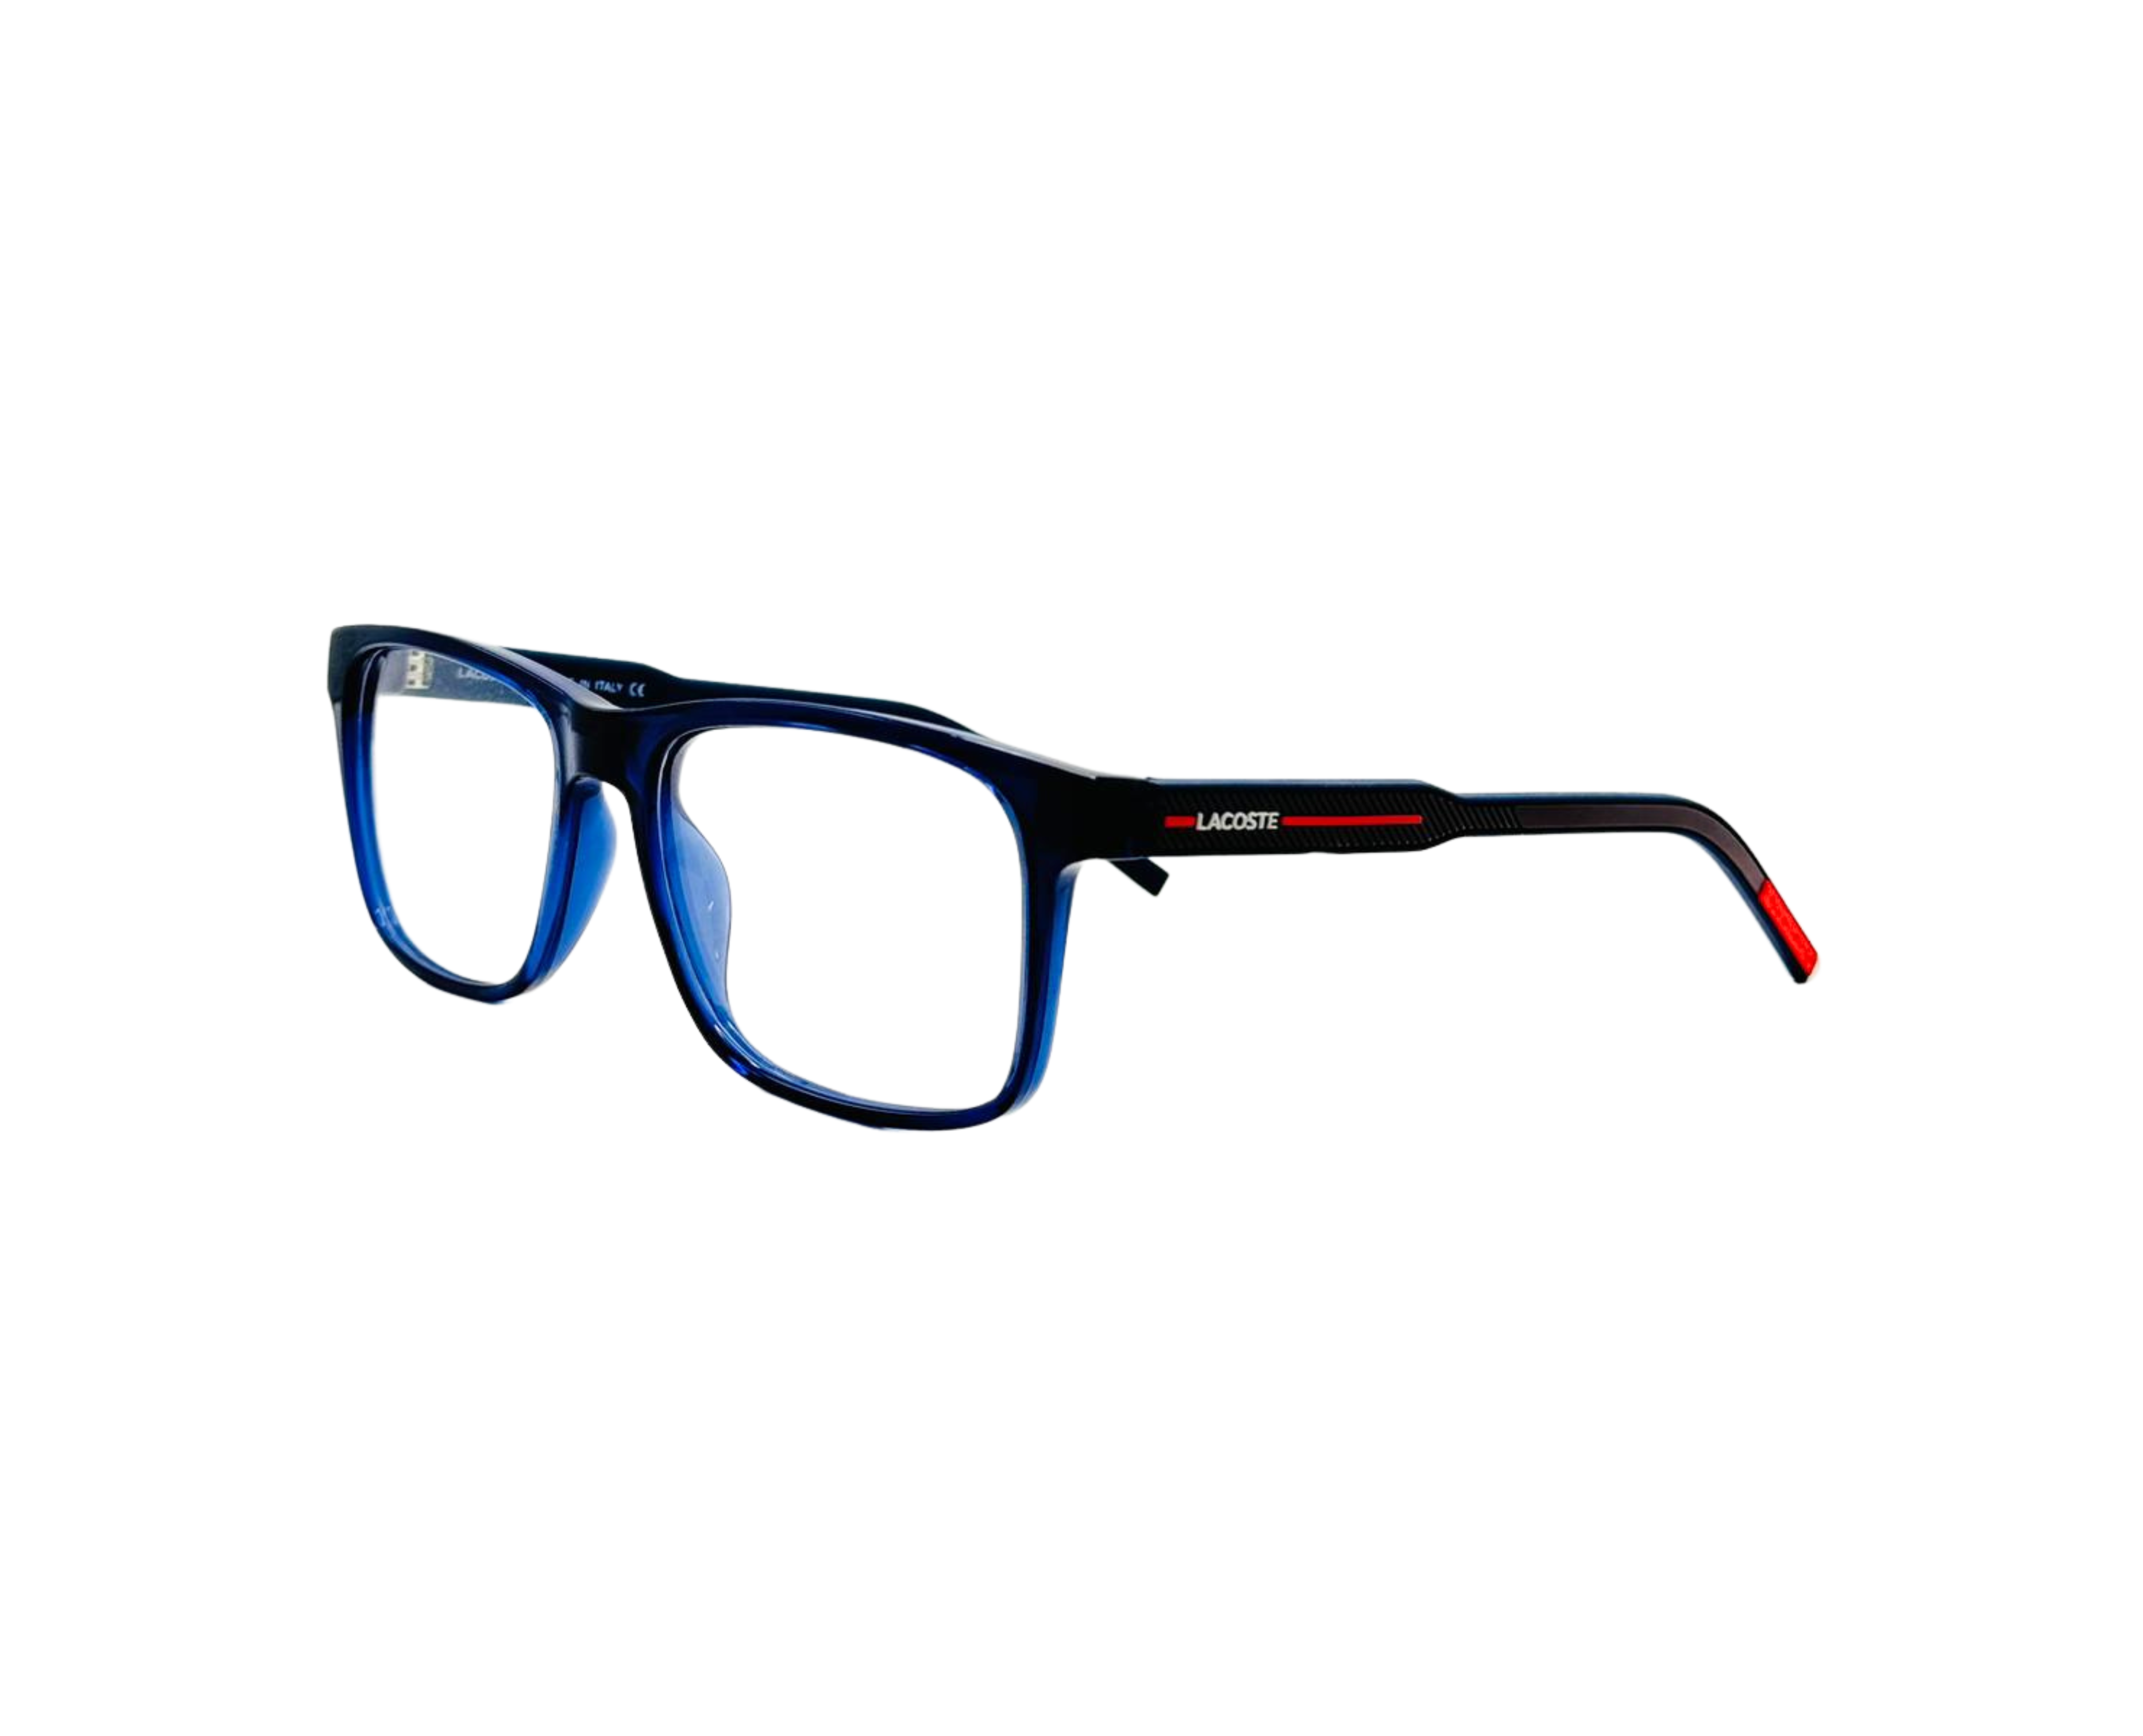 NS Luxury - 2864 - Blue - Eyeglasses